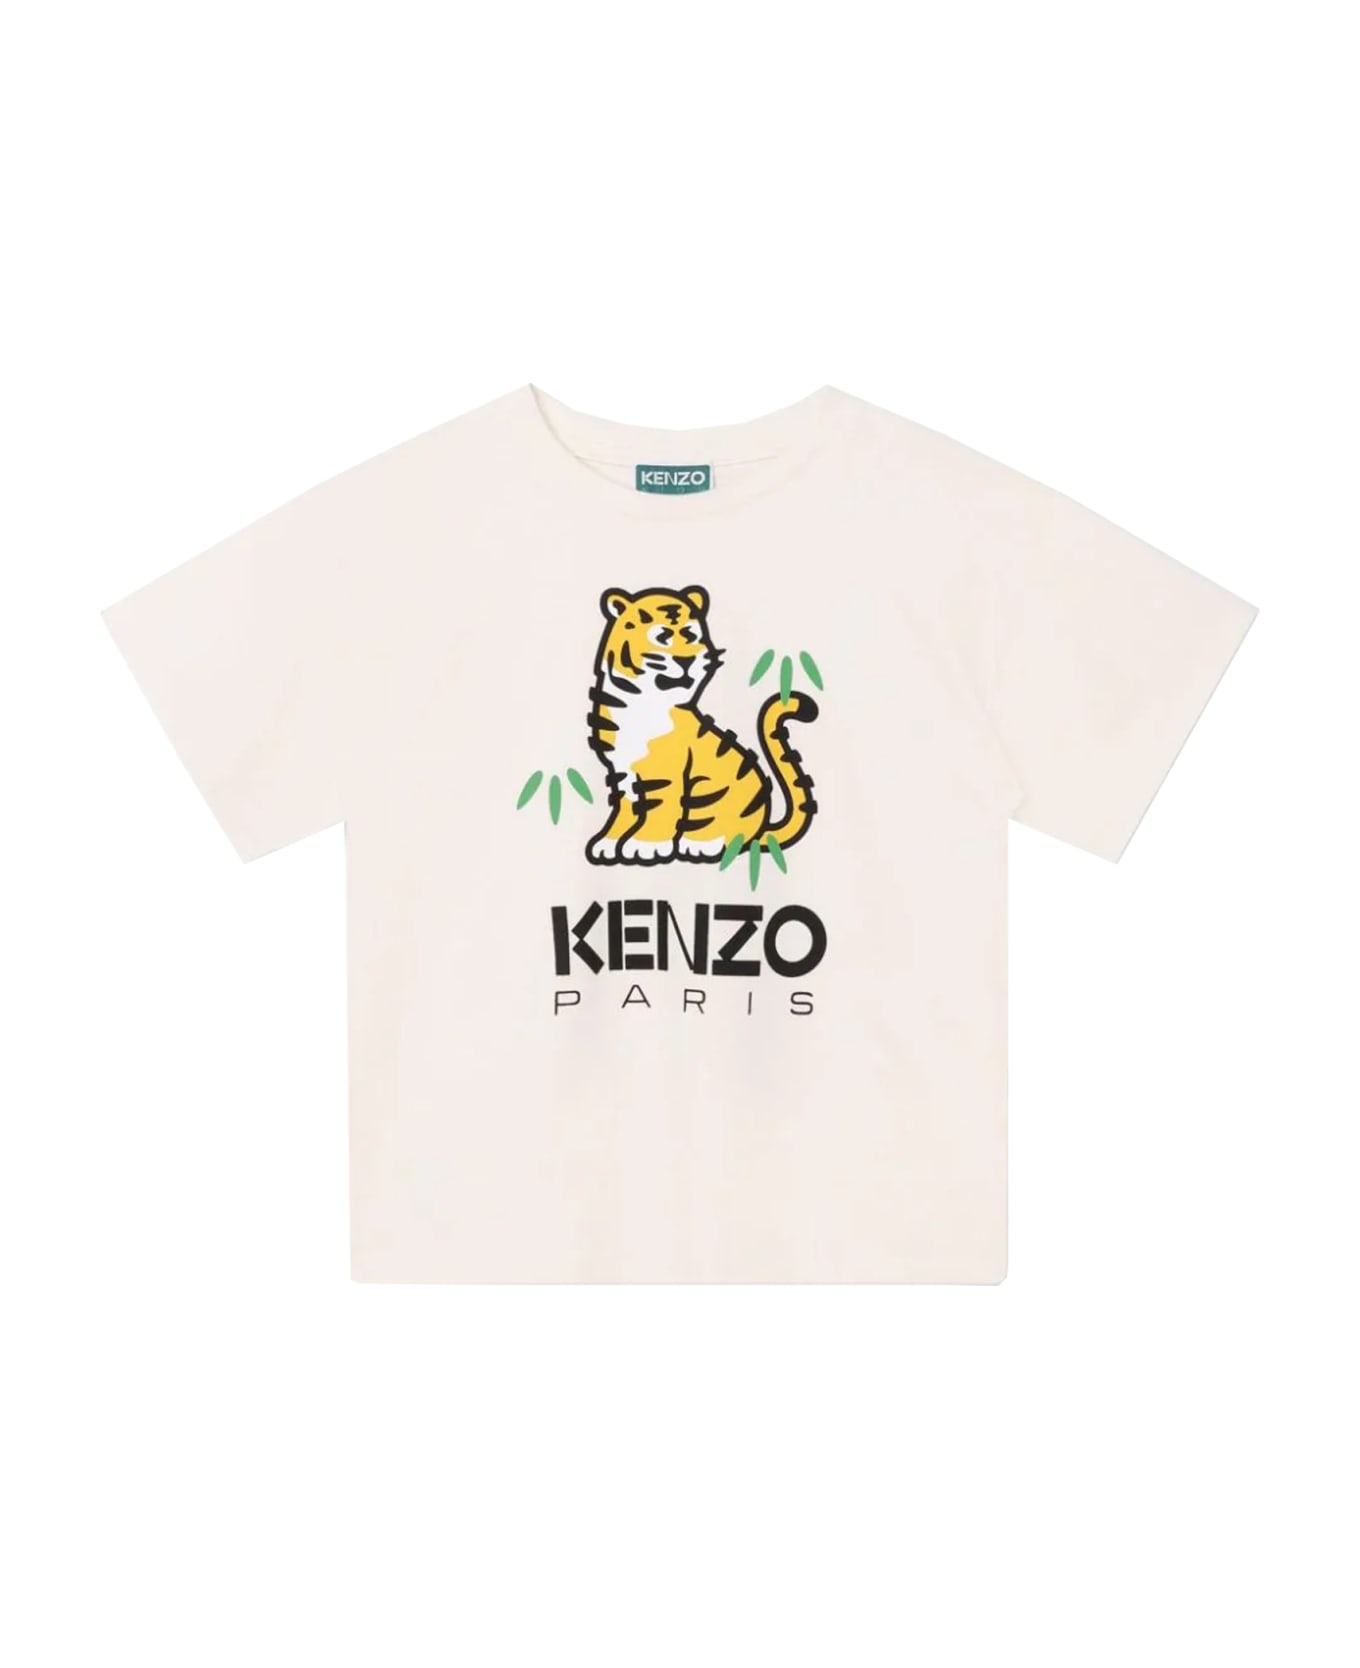 Kenzo Kids Cotton T-shirt - White